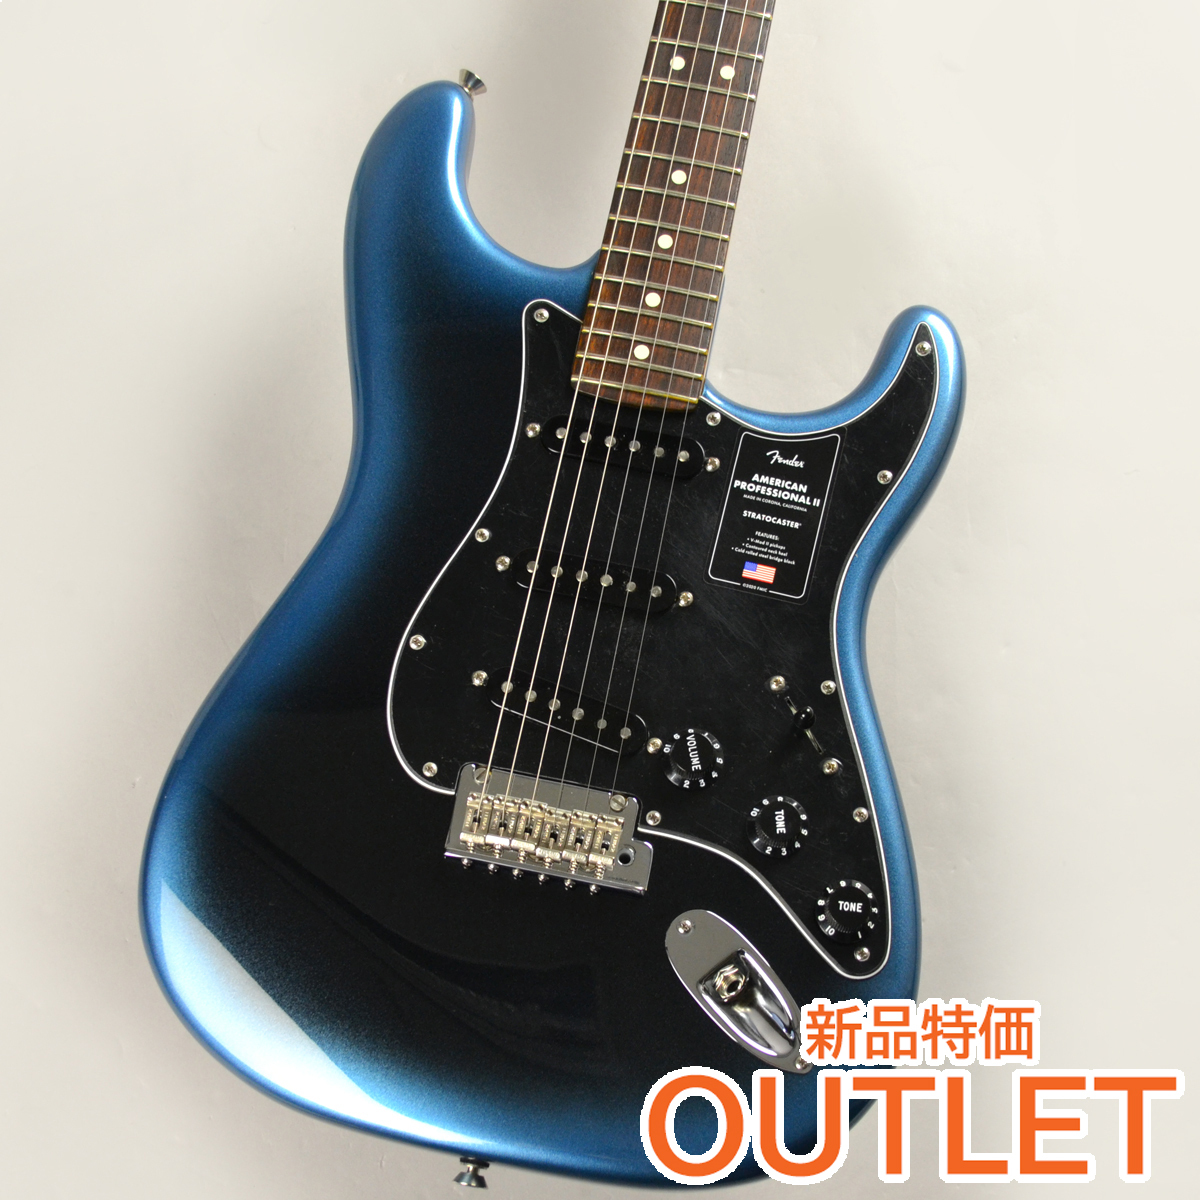 Formestar Electric Guitar Stratocaster エレキギター -GrunSound-x314- 